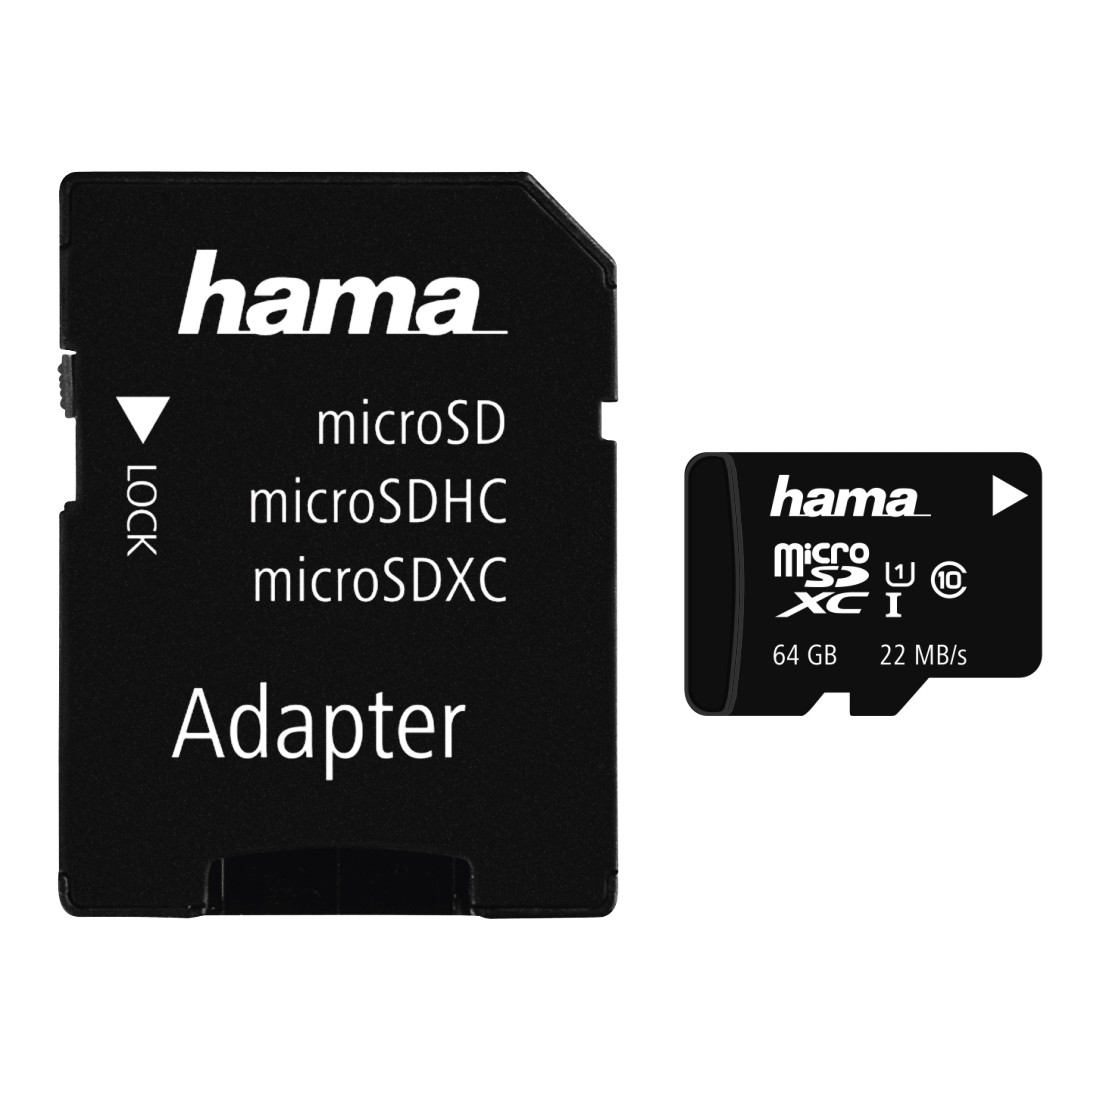 You Recently Viewed Hama 64GB Class 10 microSDXC, UHS-I 22MBs Image